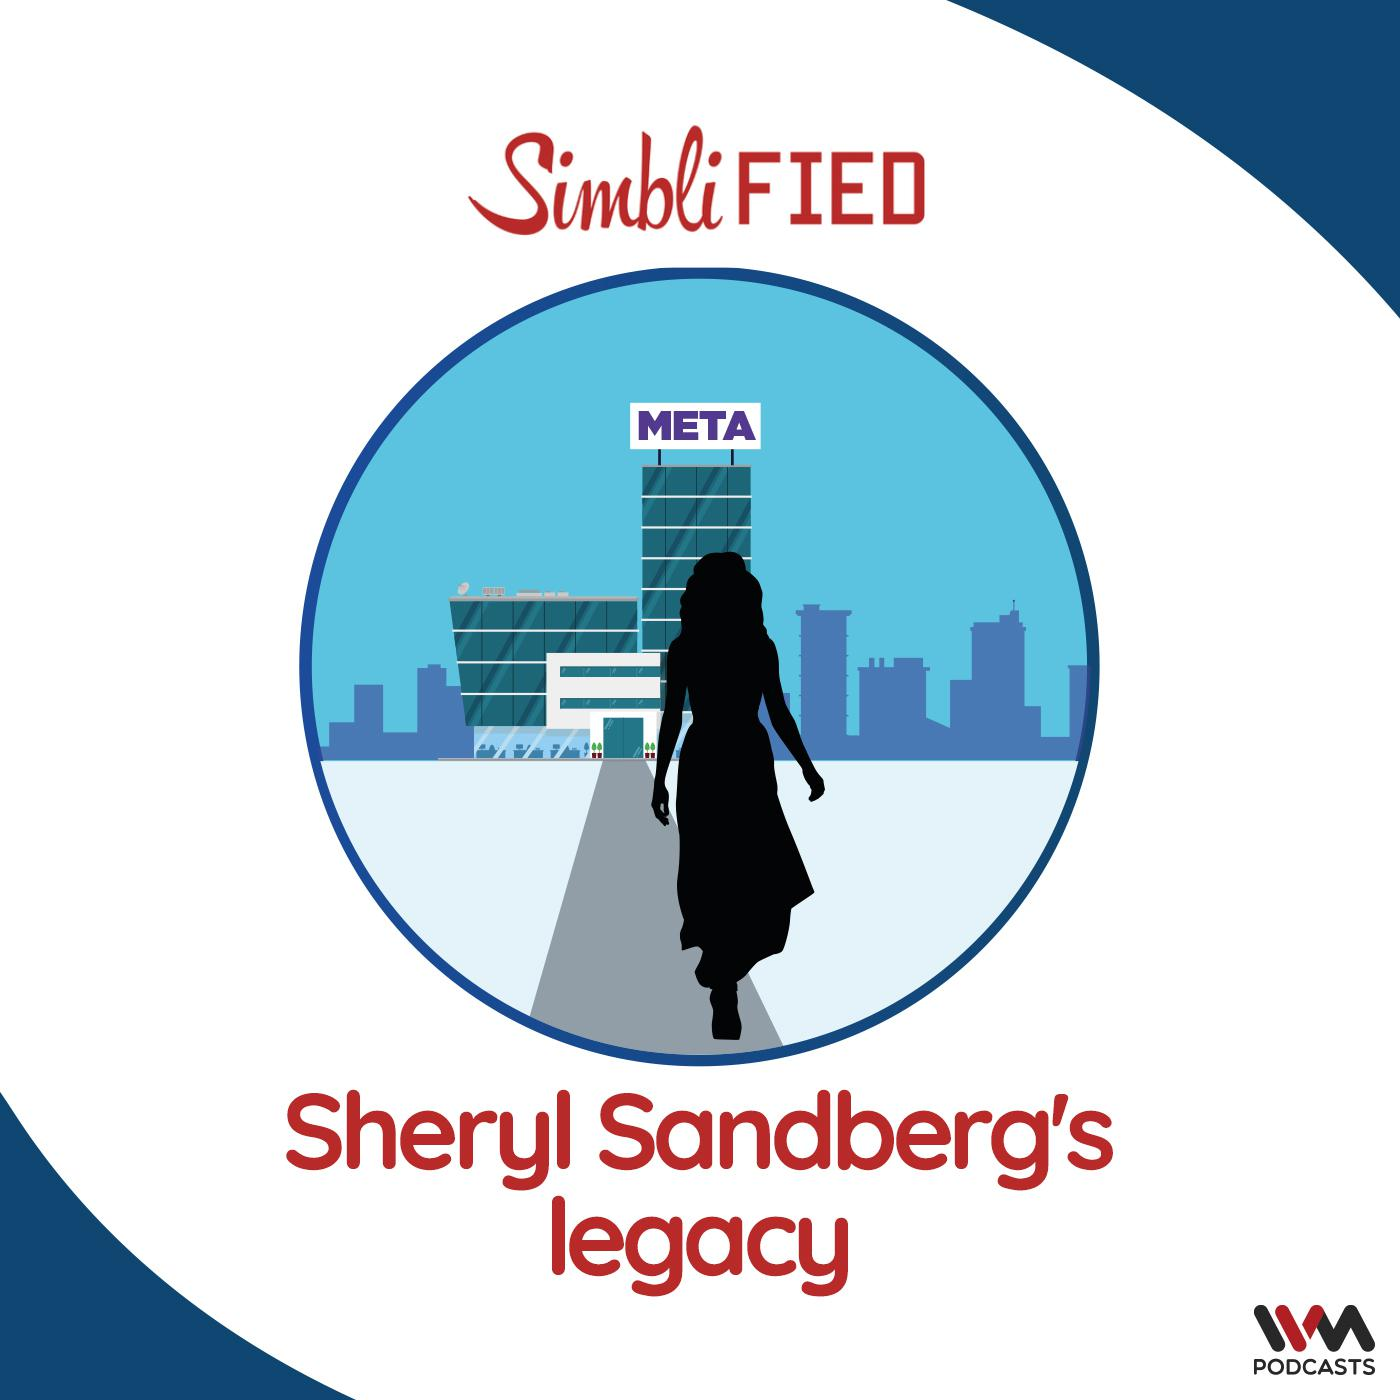 Sheryl Sandberg's legacy